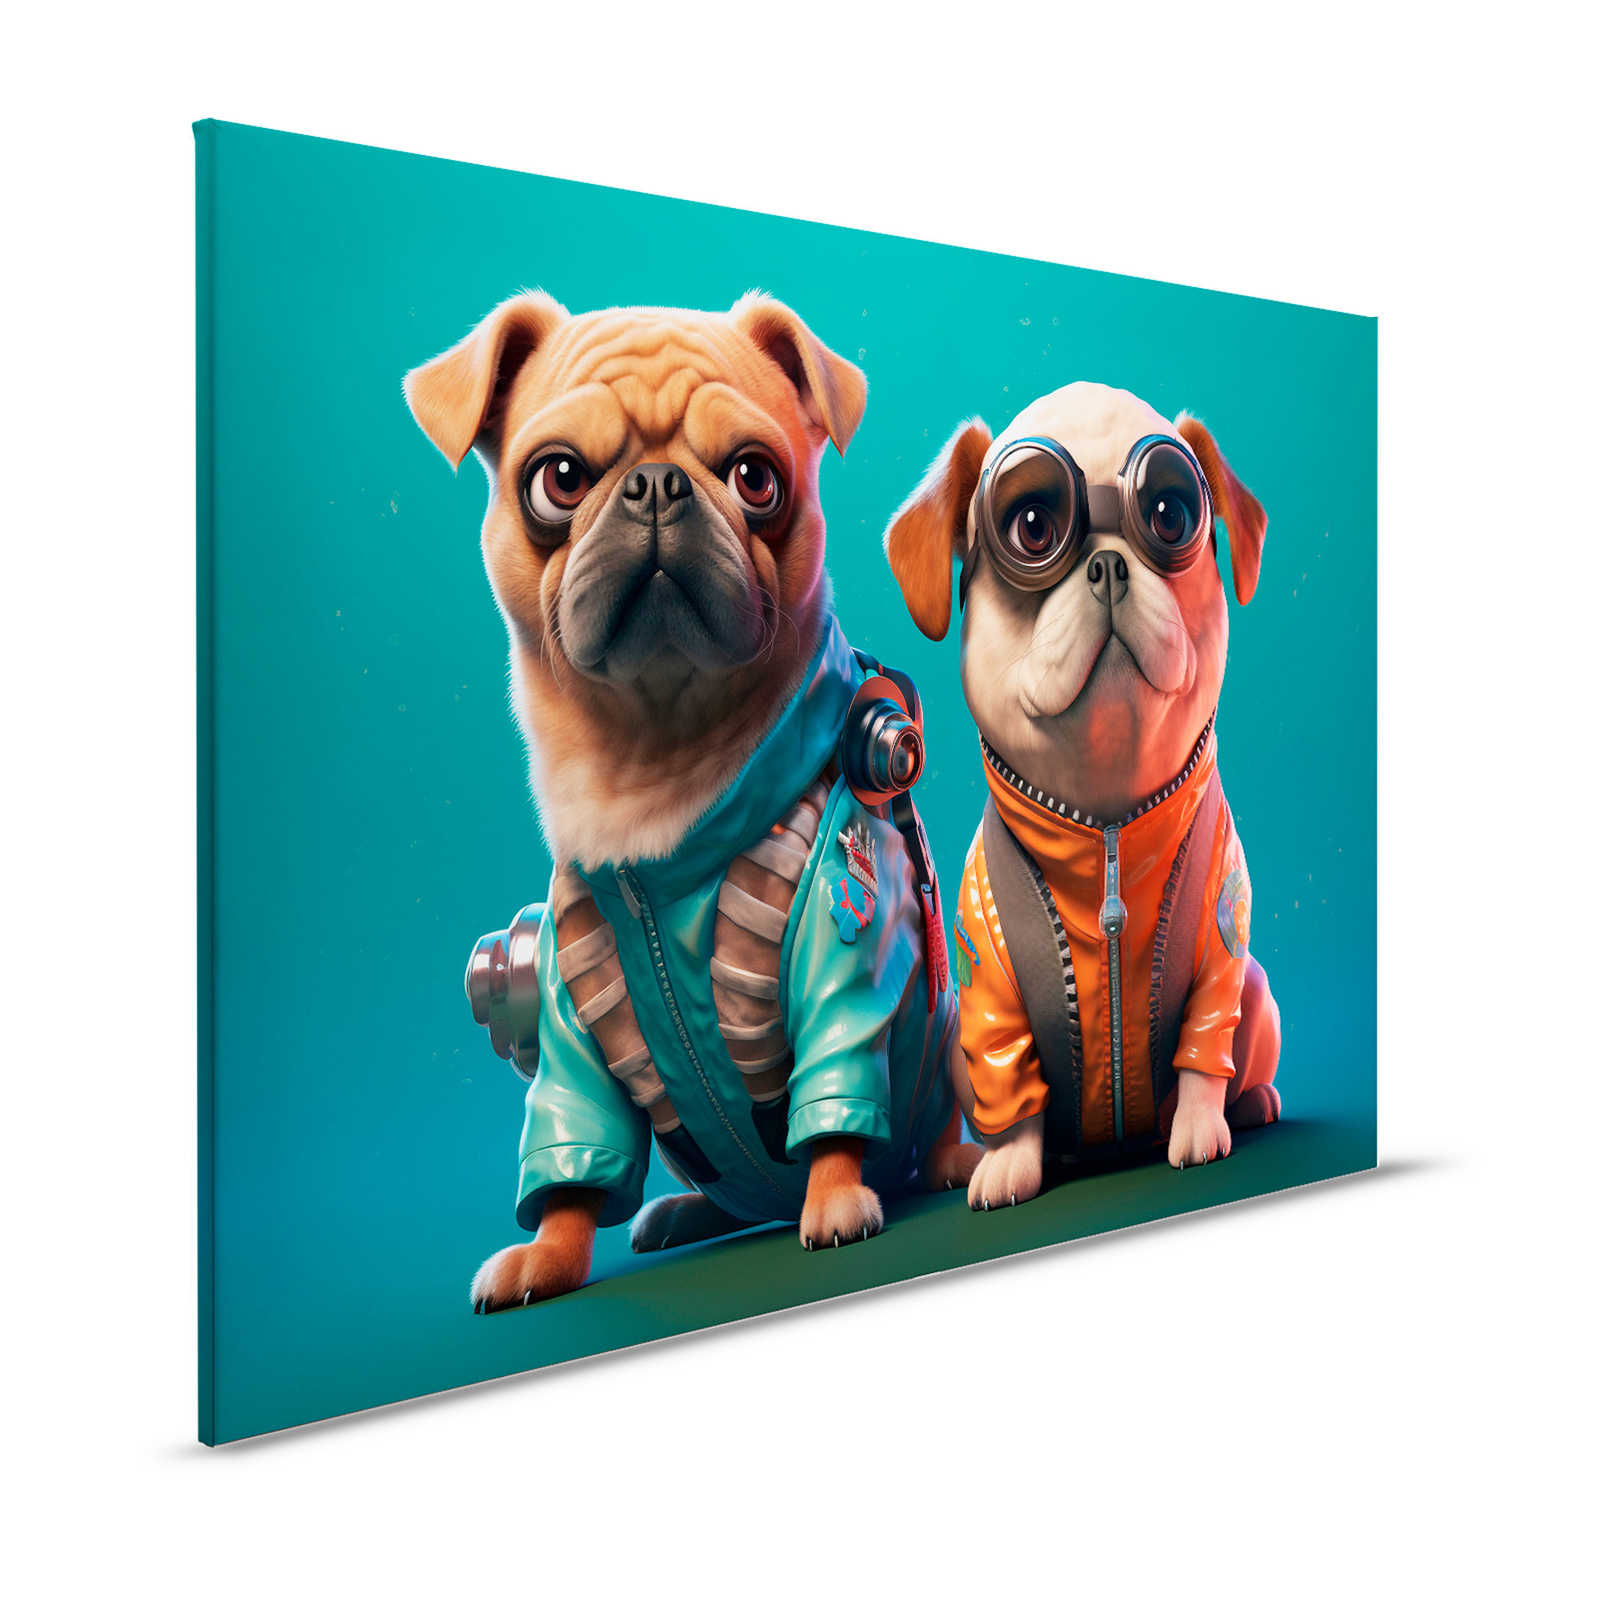 KI Canvas painting »Cute Dogs« - 120 cm x 80 cm
